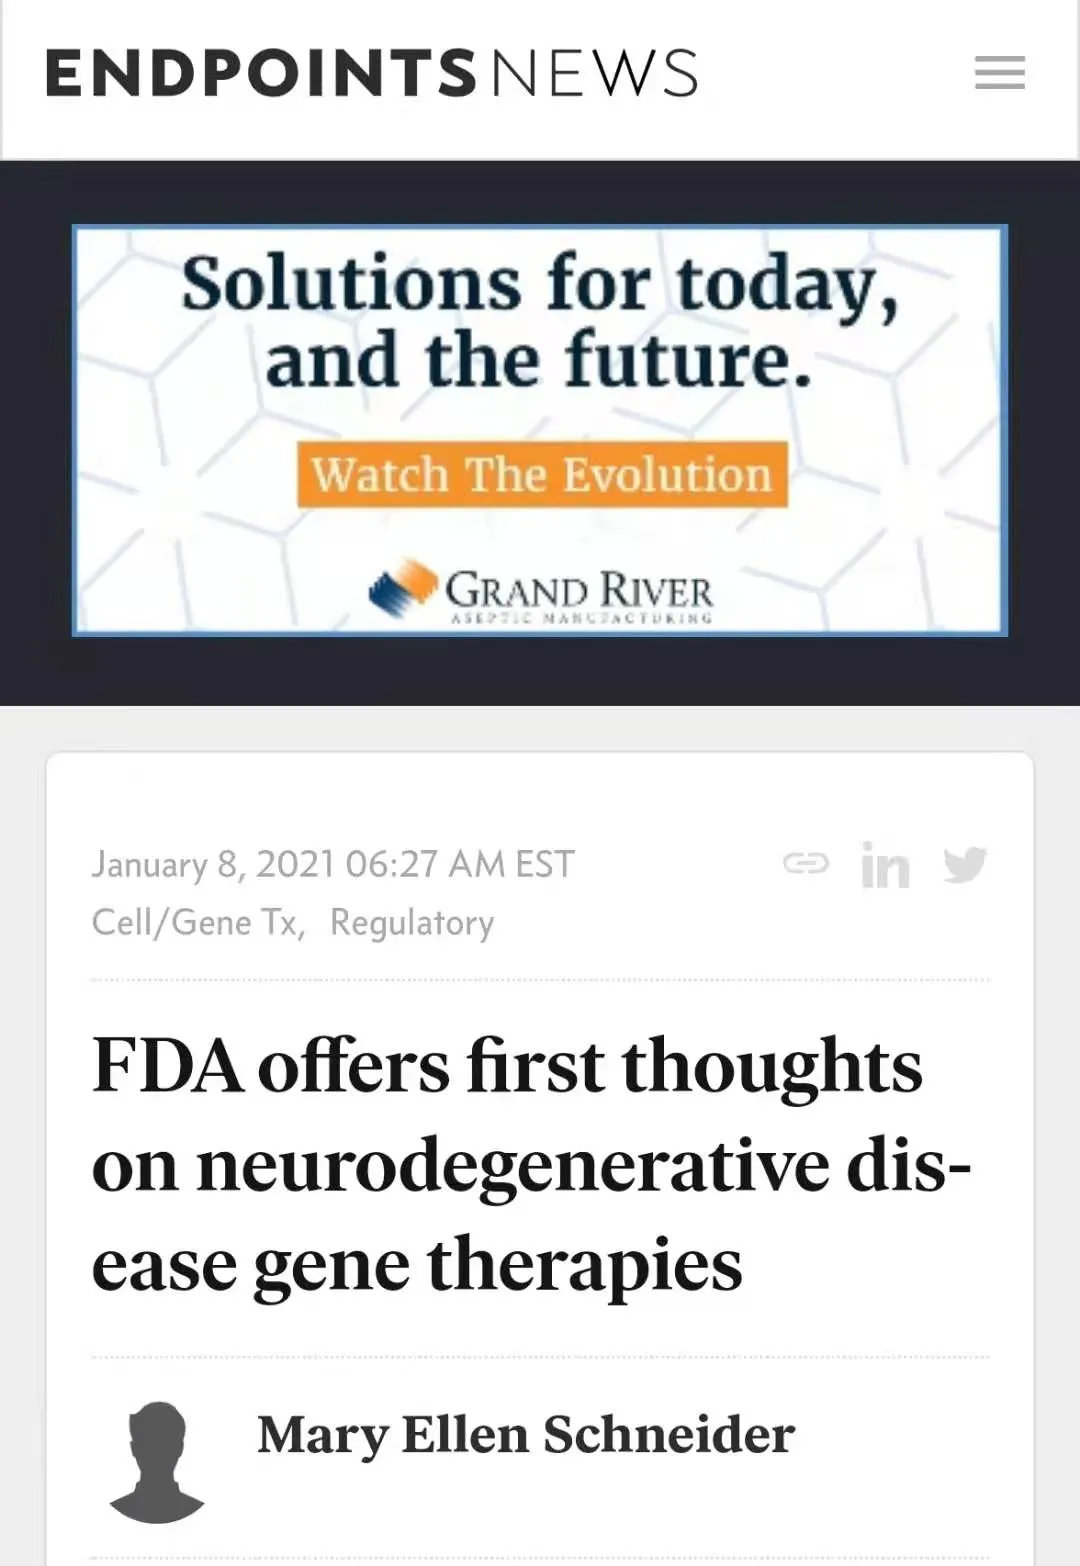 FDA对神经退行性疾病基因疗法发表了初步观点